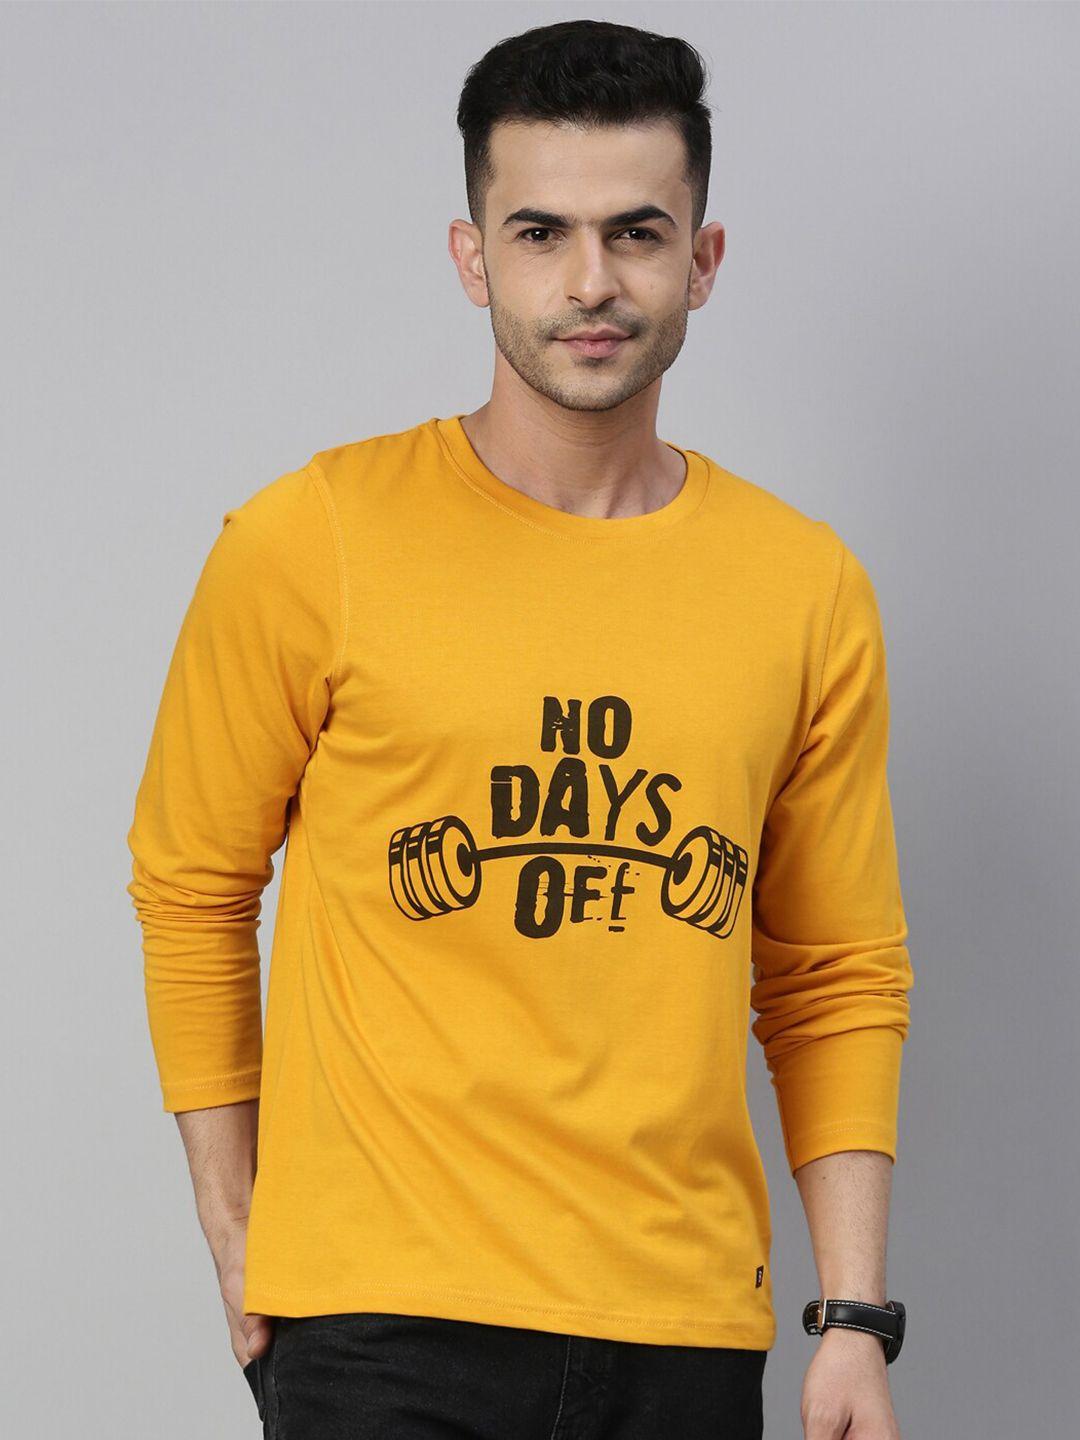 bushirt men mustard yellow typography printed raw edge t-shirt